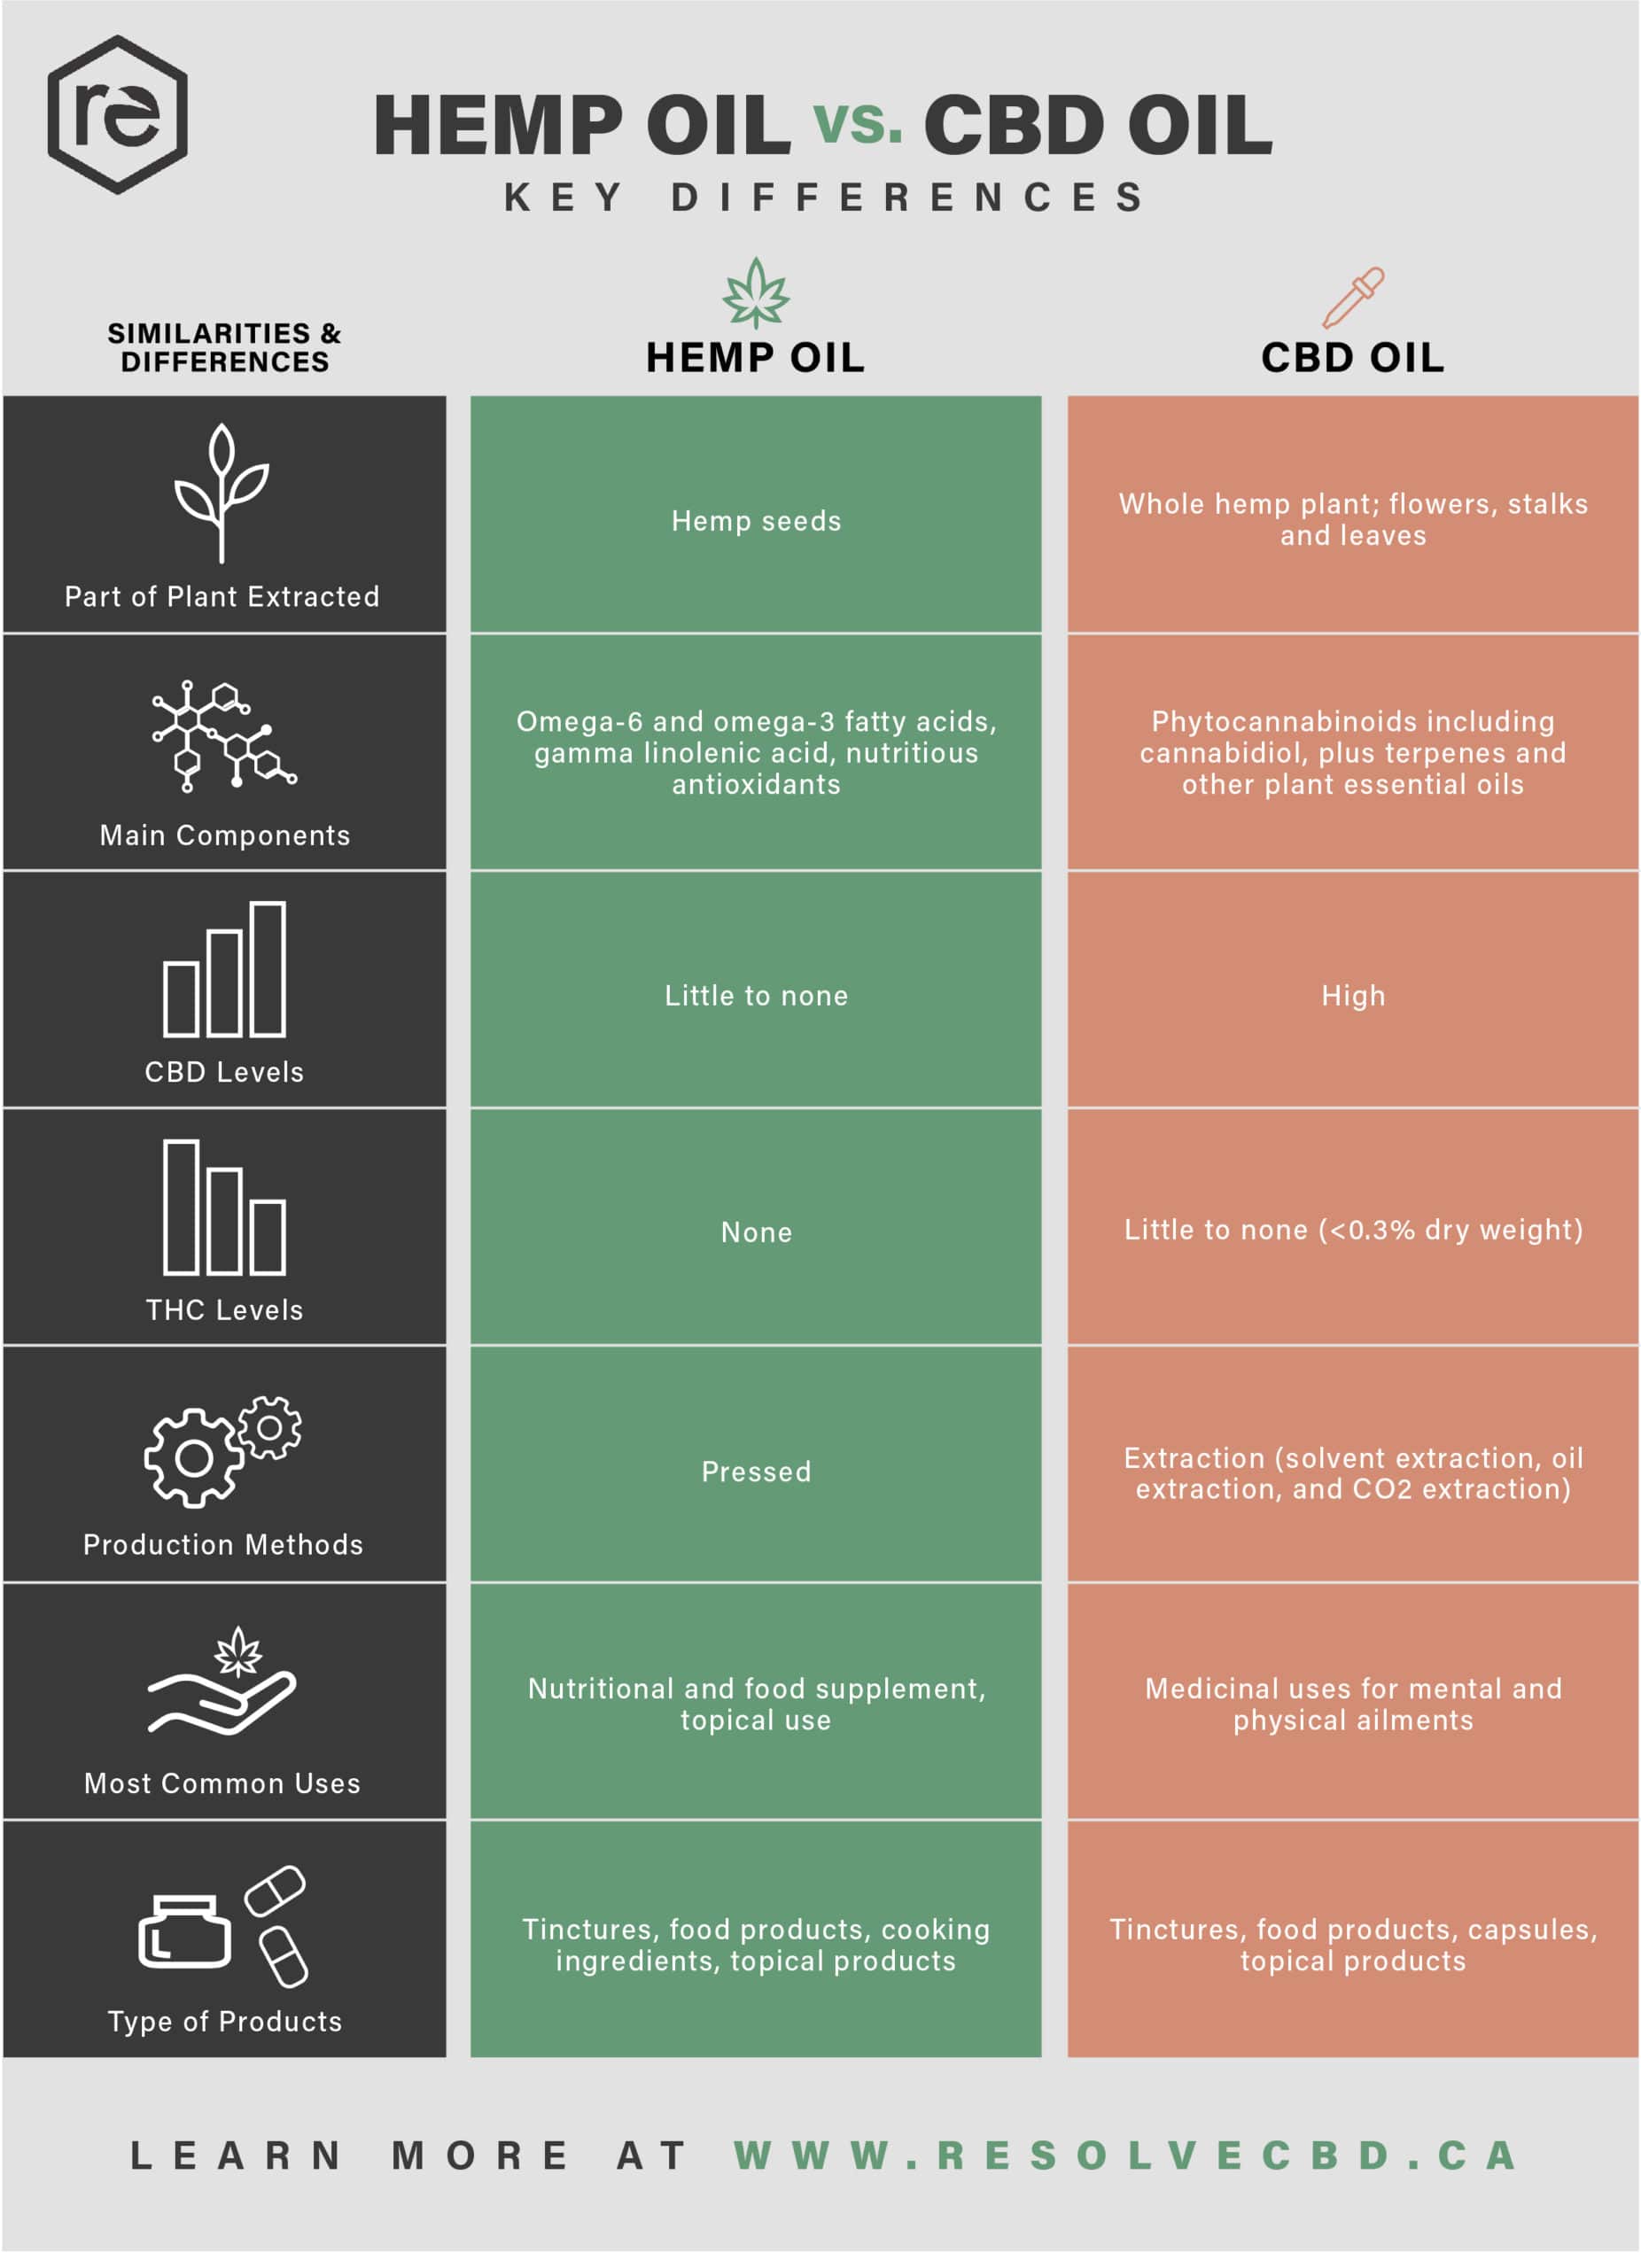 Hemp oil vs. CBD